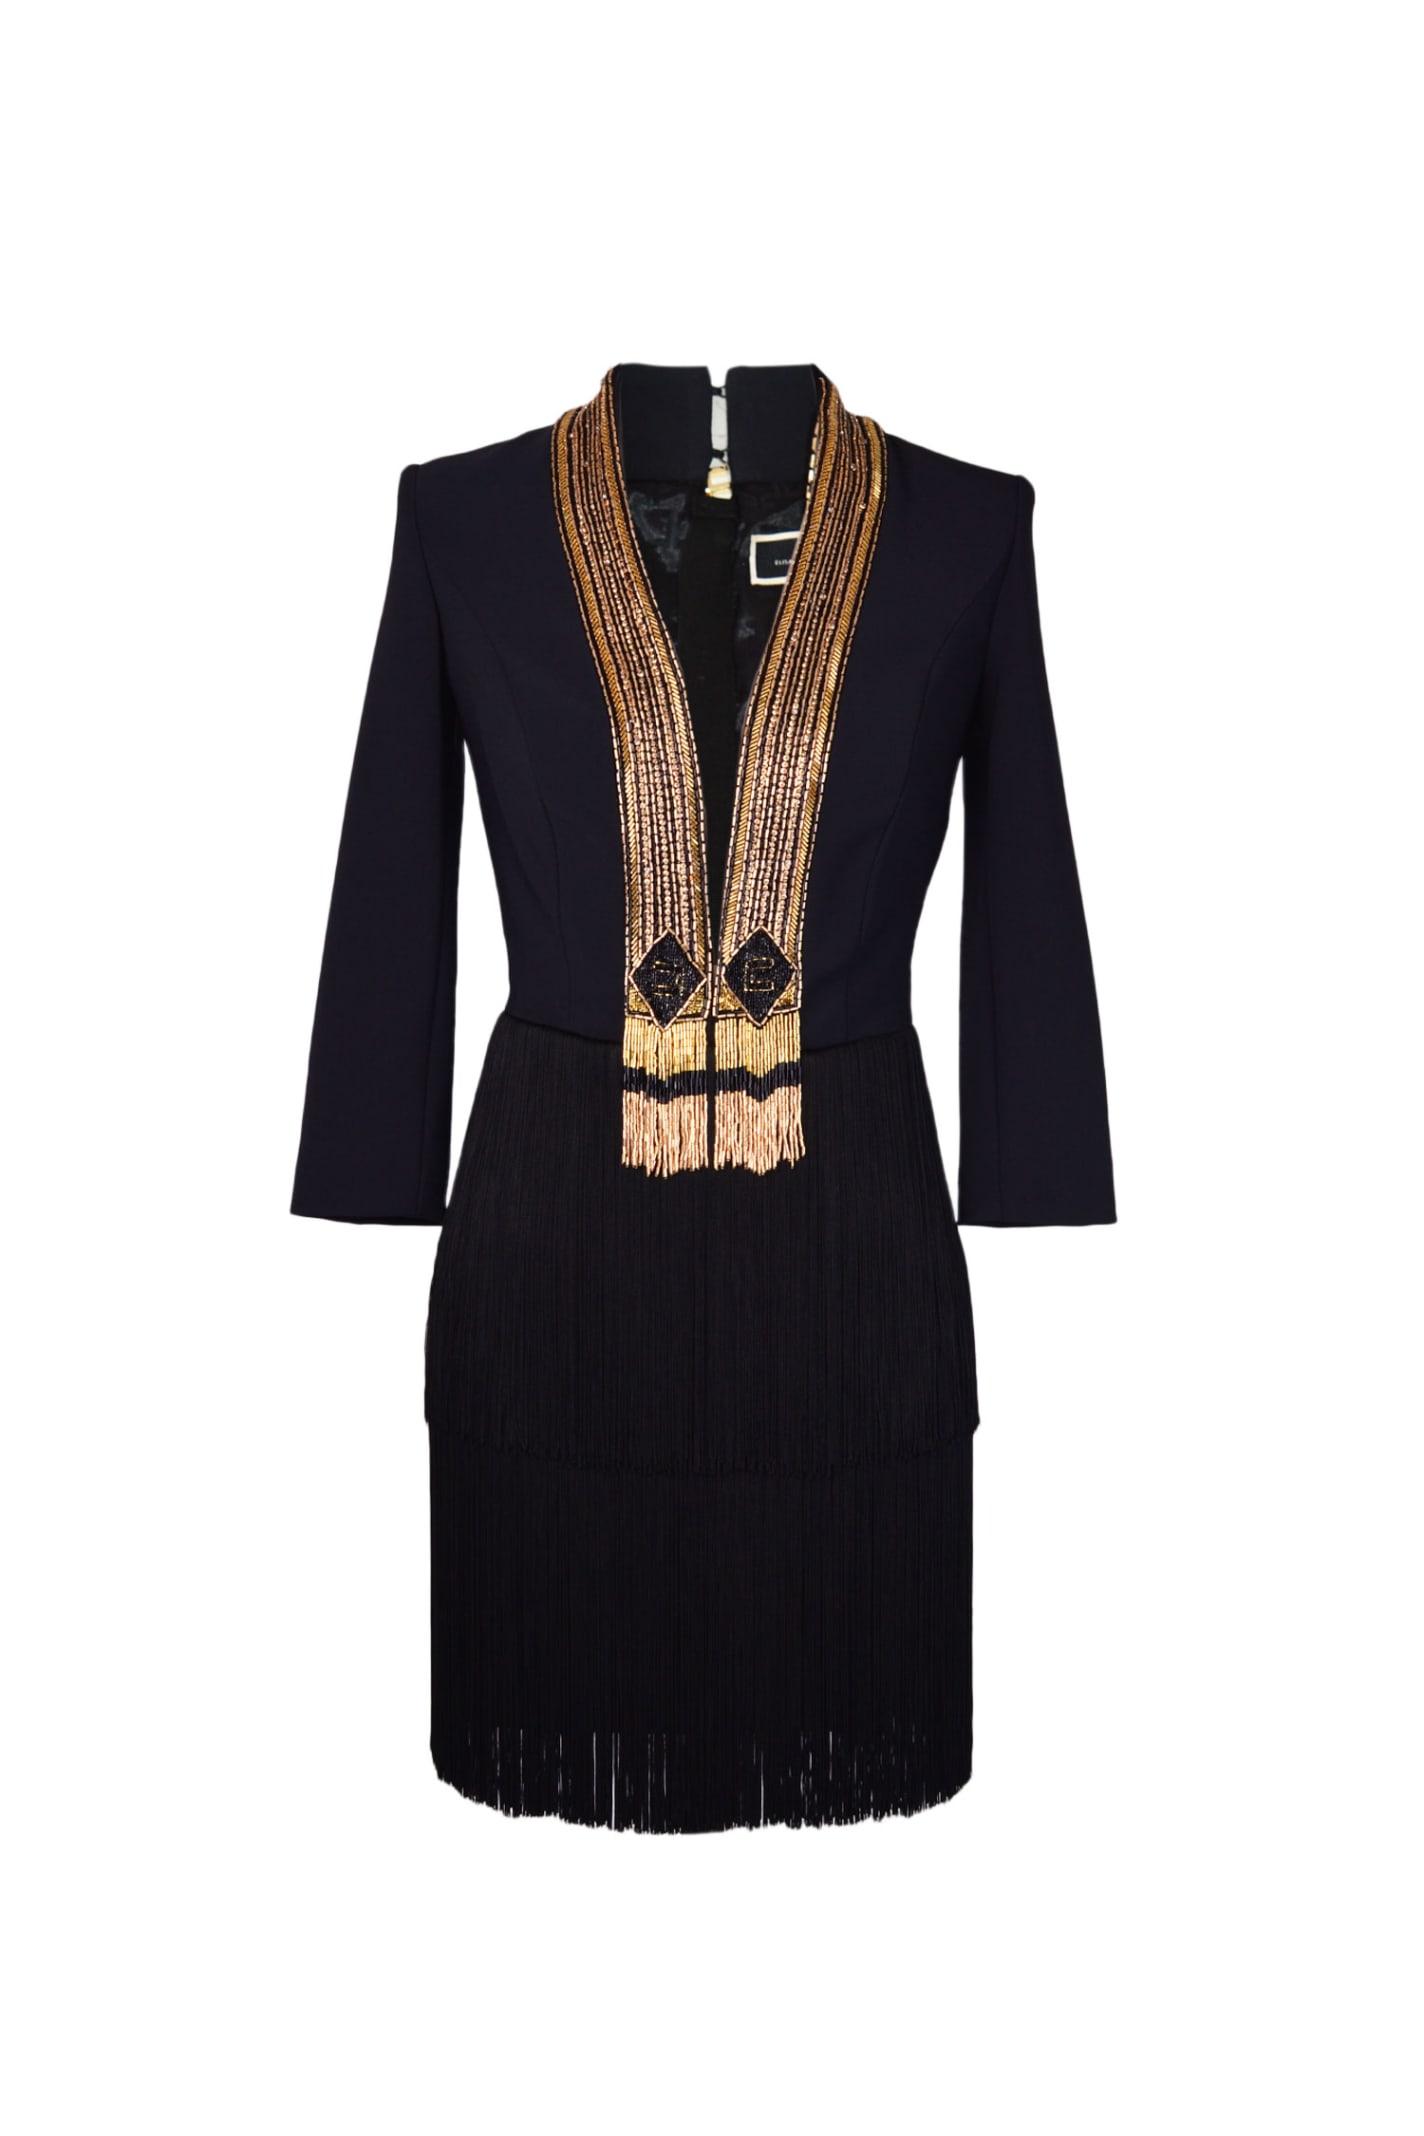 Elisabetta Franchi Fringe Detailed Mini Dress in Black | Lyst